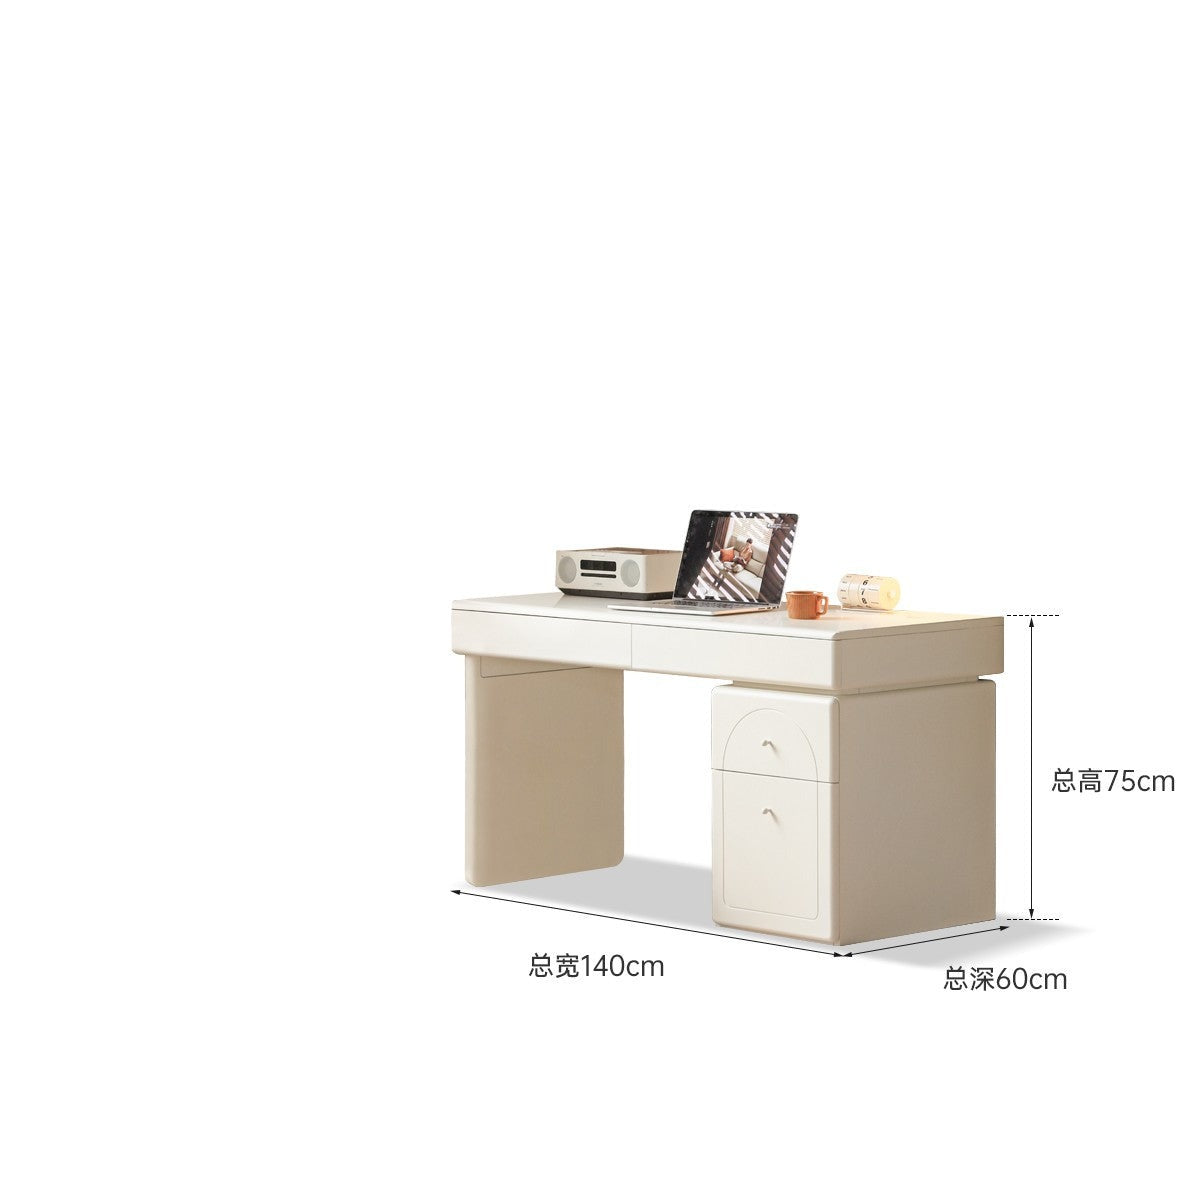 Poplar solid wood desk bookshelf integrated study table)